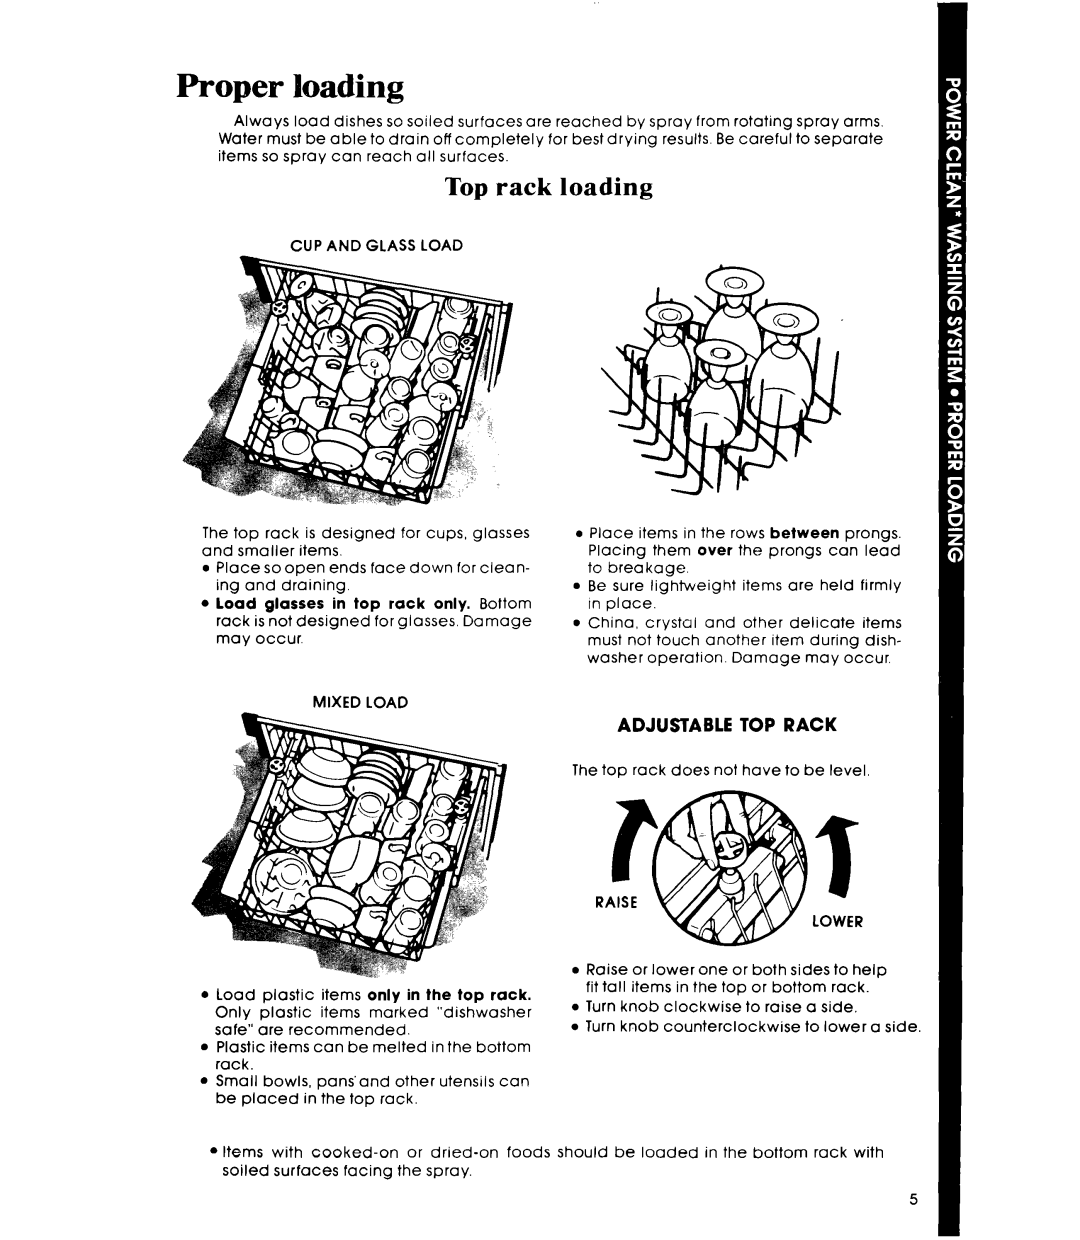 Whirlpool DUSOOXR manual Proper loading, Top rack loading 